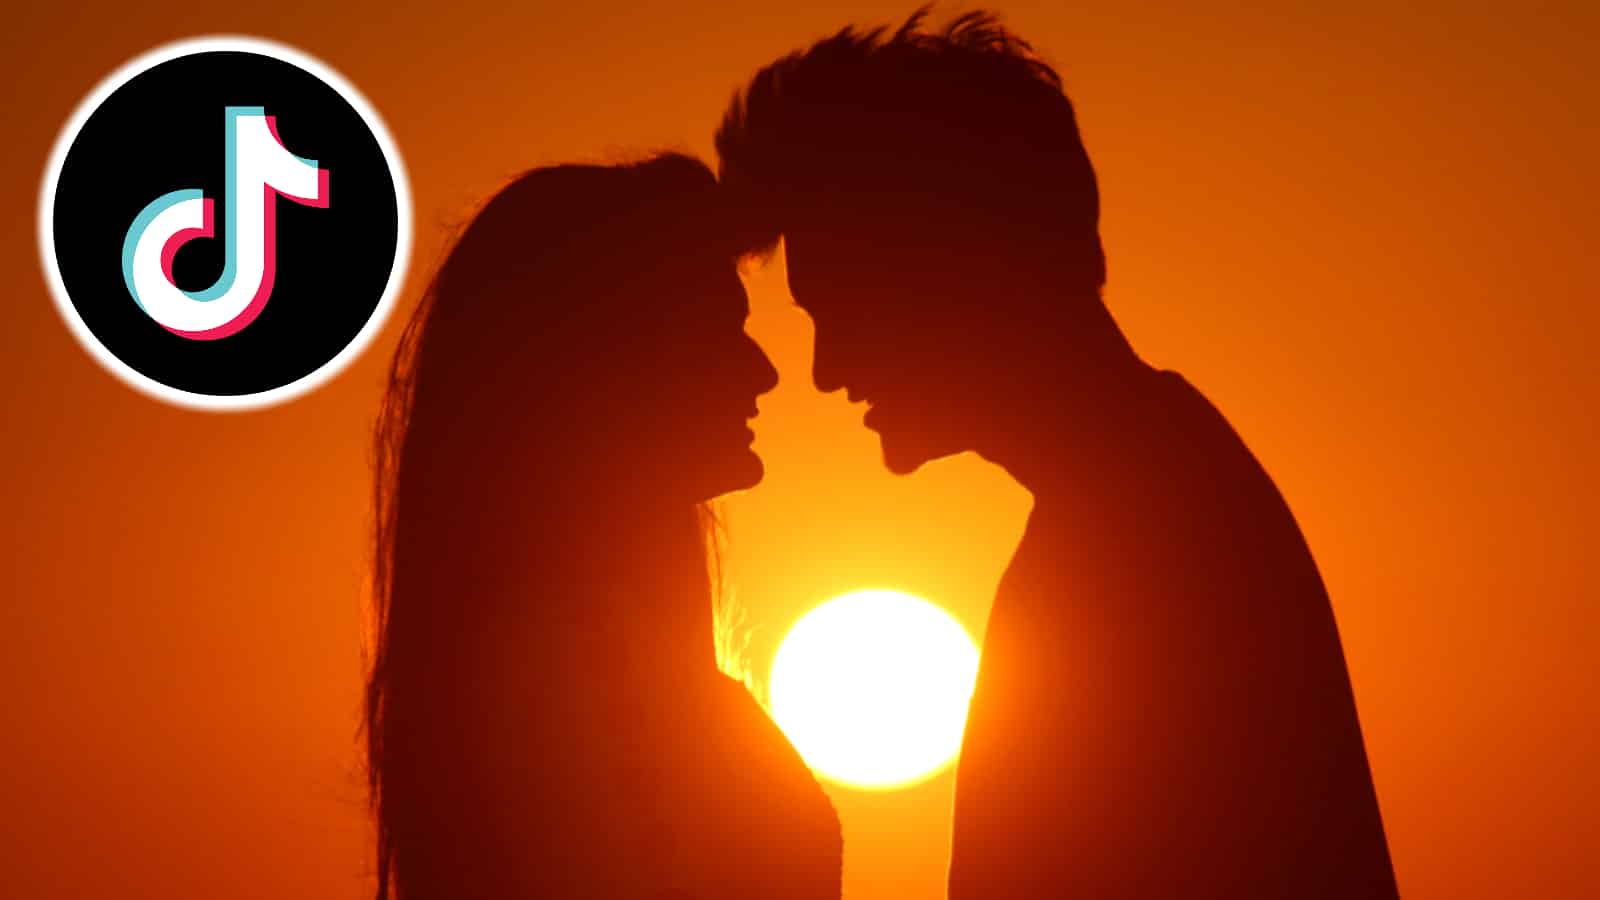 TikTok's New Trend is 'Best Friends Kissing,' Unless You're Women